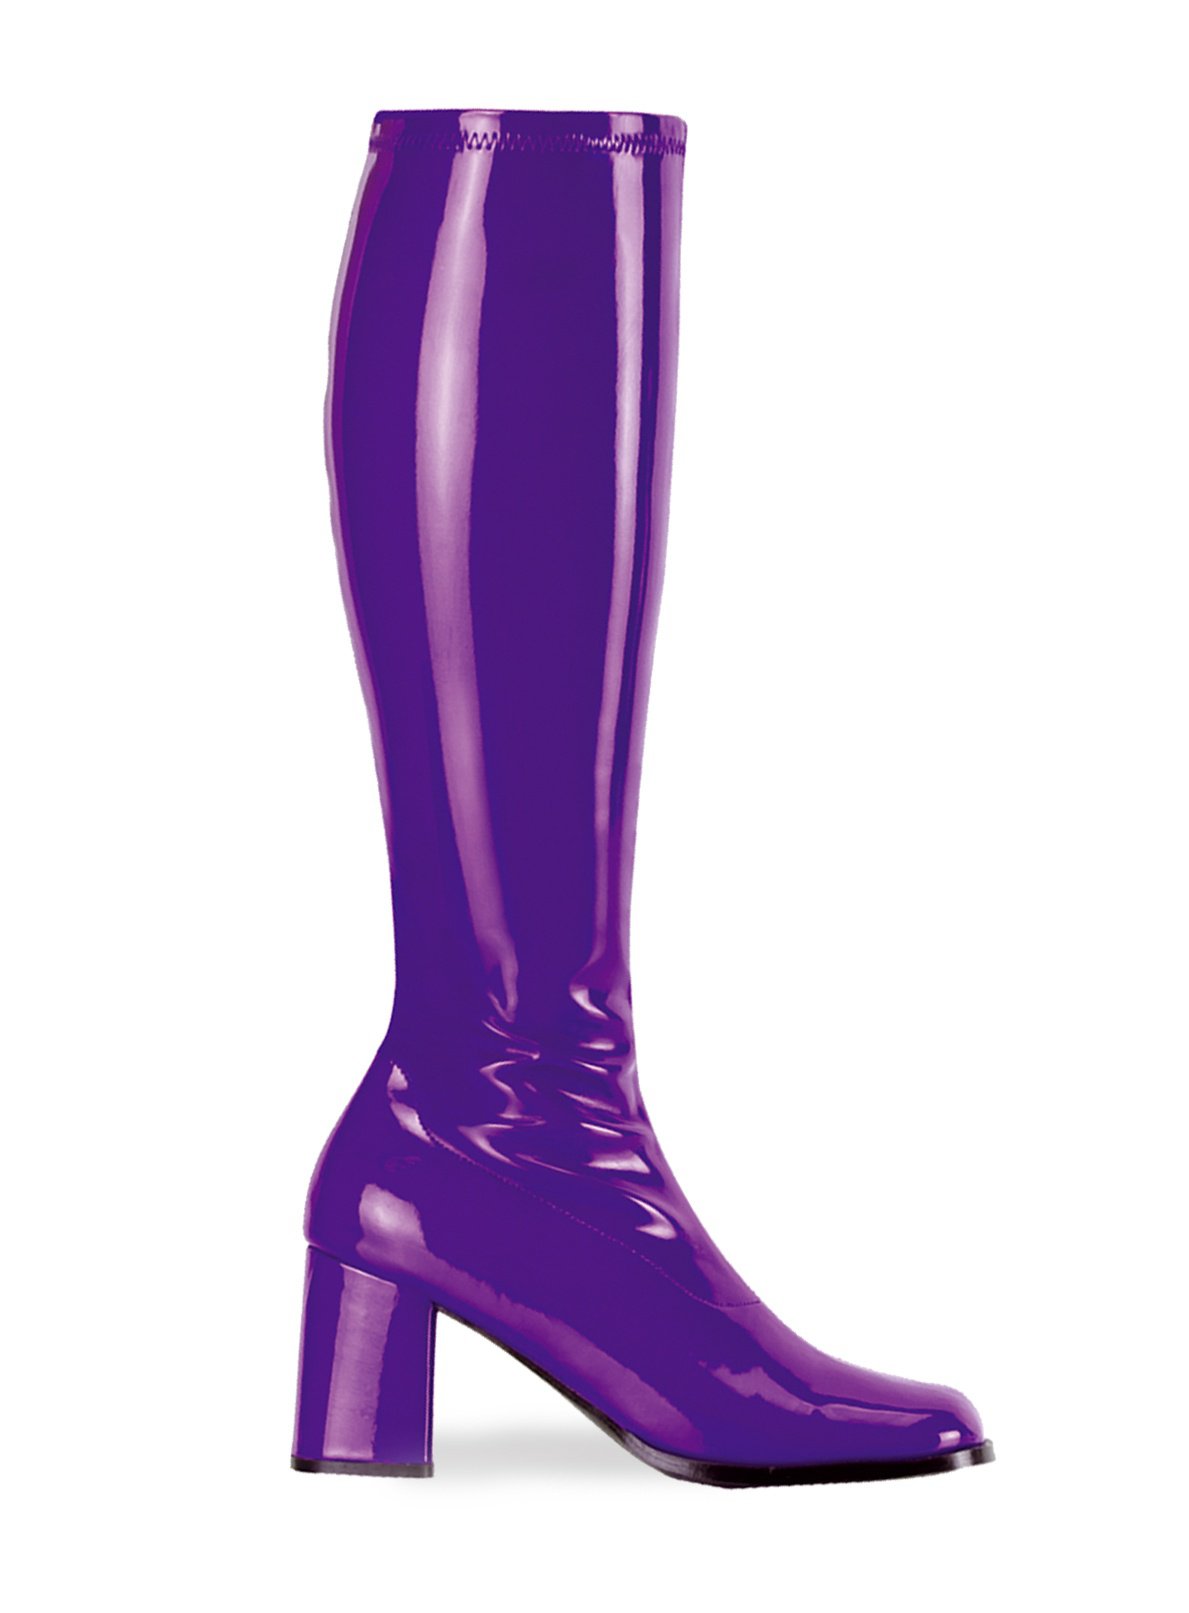 https://i.mmo.cm/is/image/mmoimg/mmo-markets/103968-retro-stretchlack-stiefel-lila-violett-vinyl-boots-violet.jpg